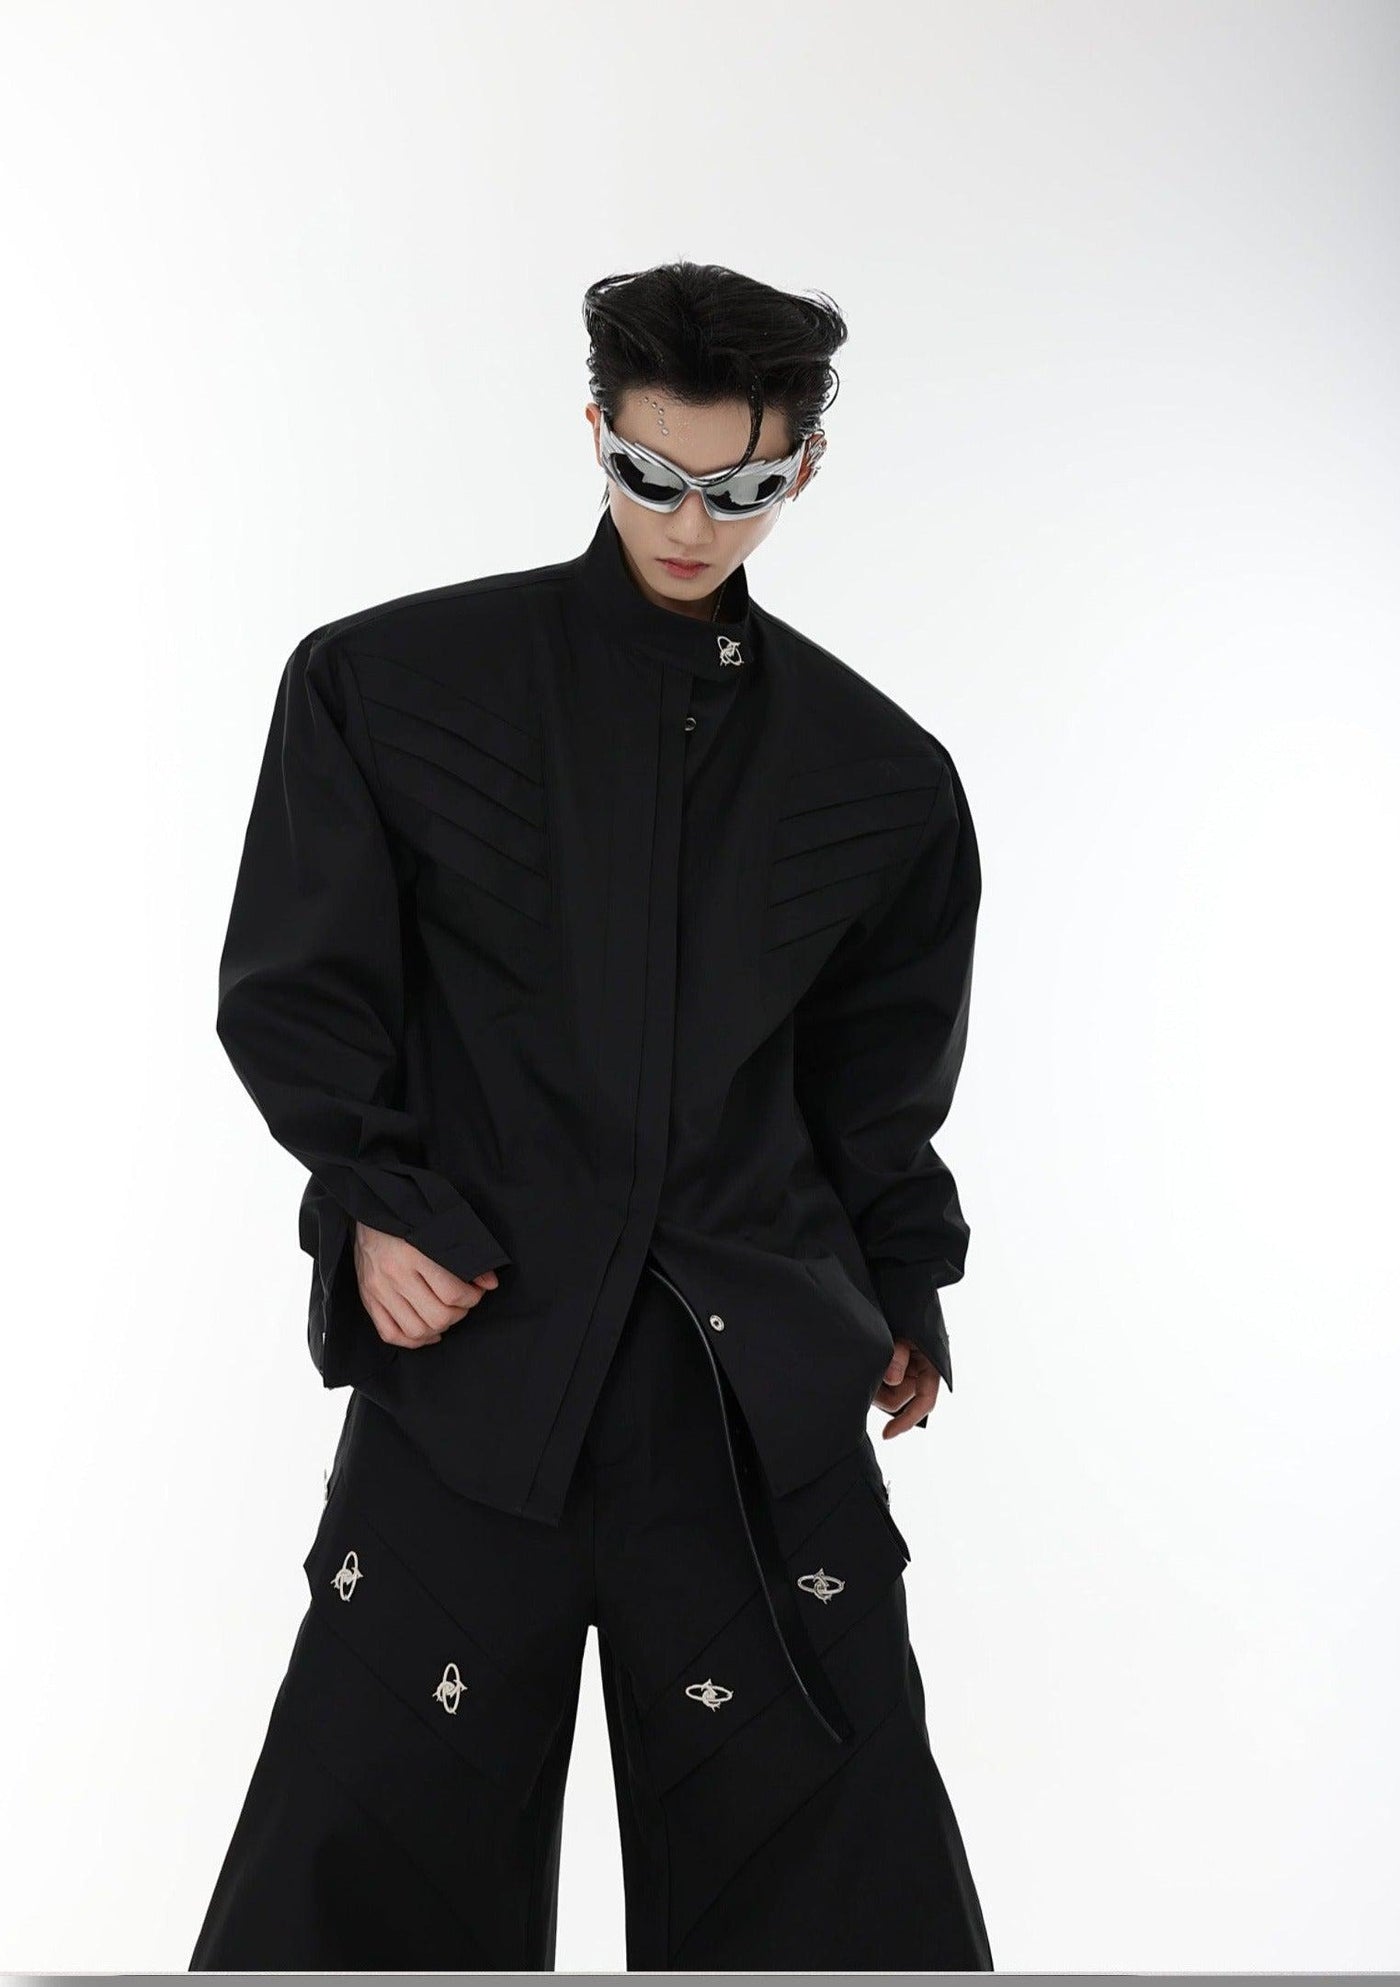 Metallic Stand Collar Long Sleeve Shirt Korean Street Fashion Shirt By Argue Culture Shop Online at OH Vault